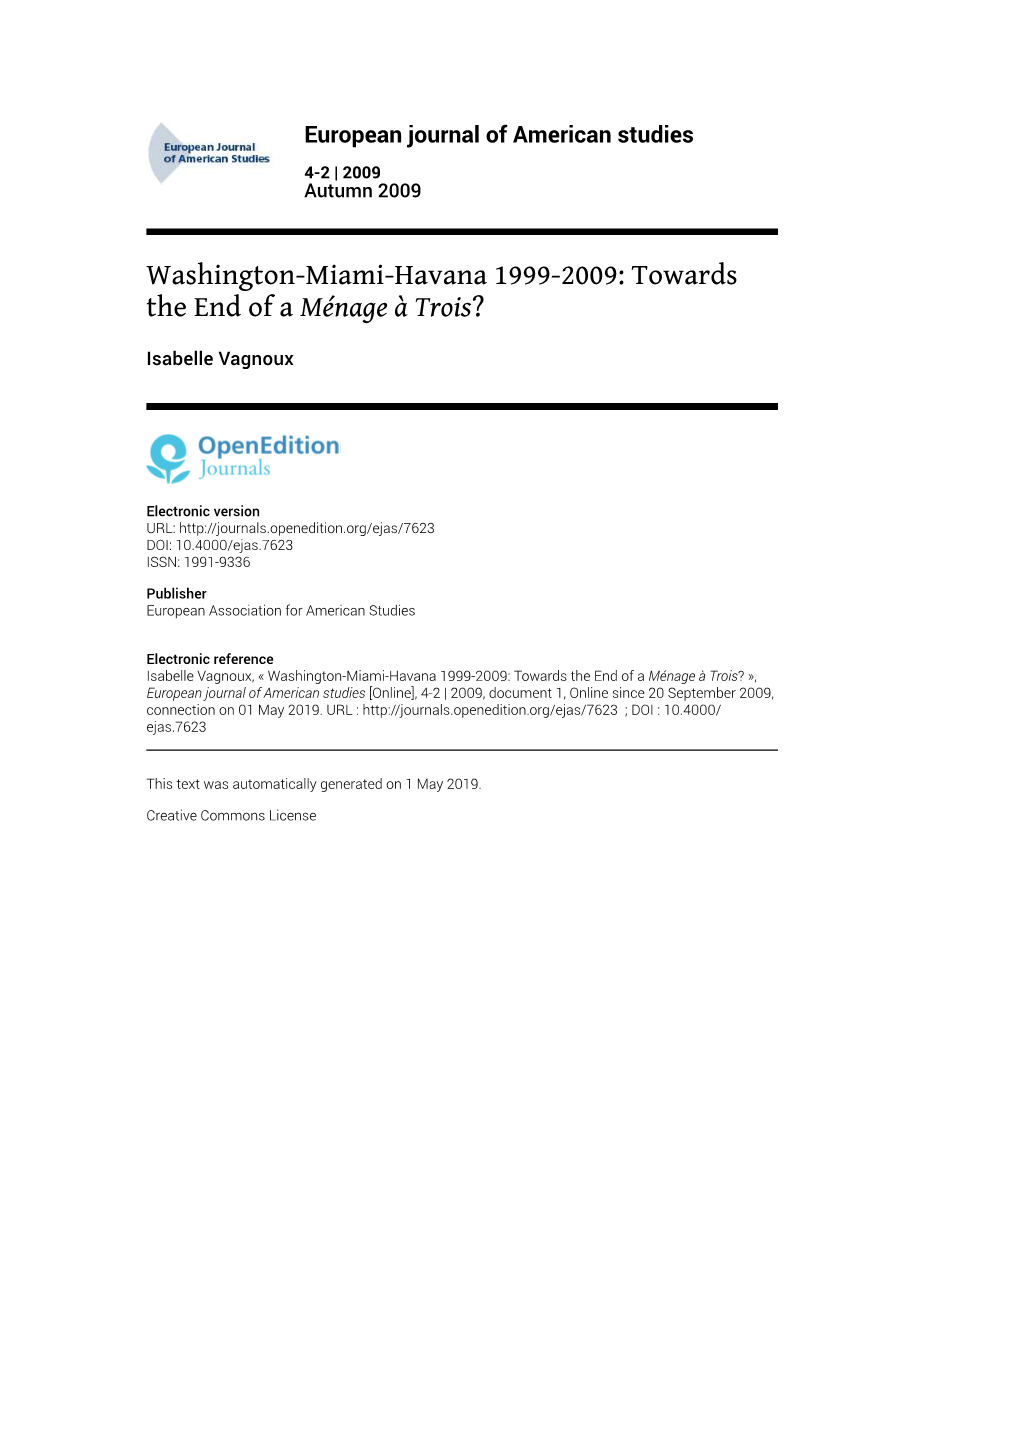 Washington-Miami-Havana 1999-2009: Towards the End of a Ménage À Trois?